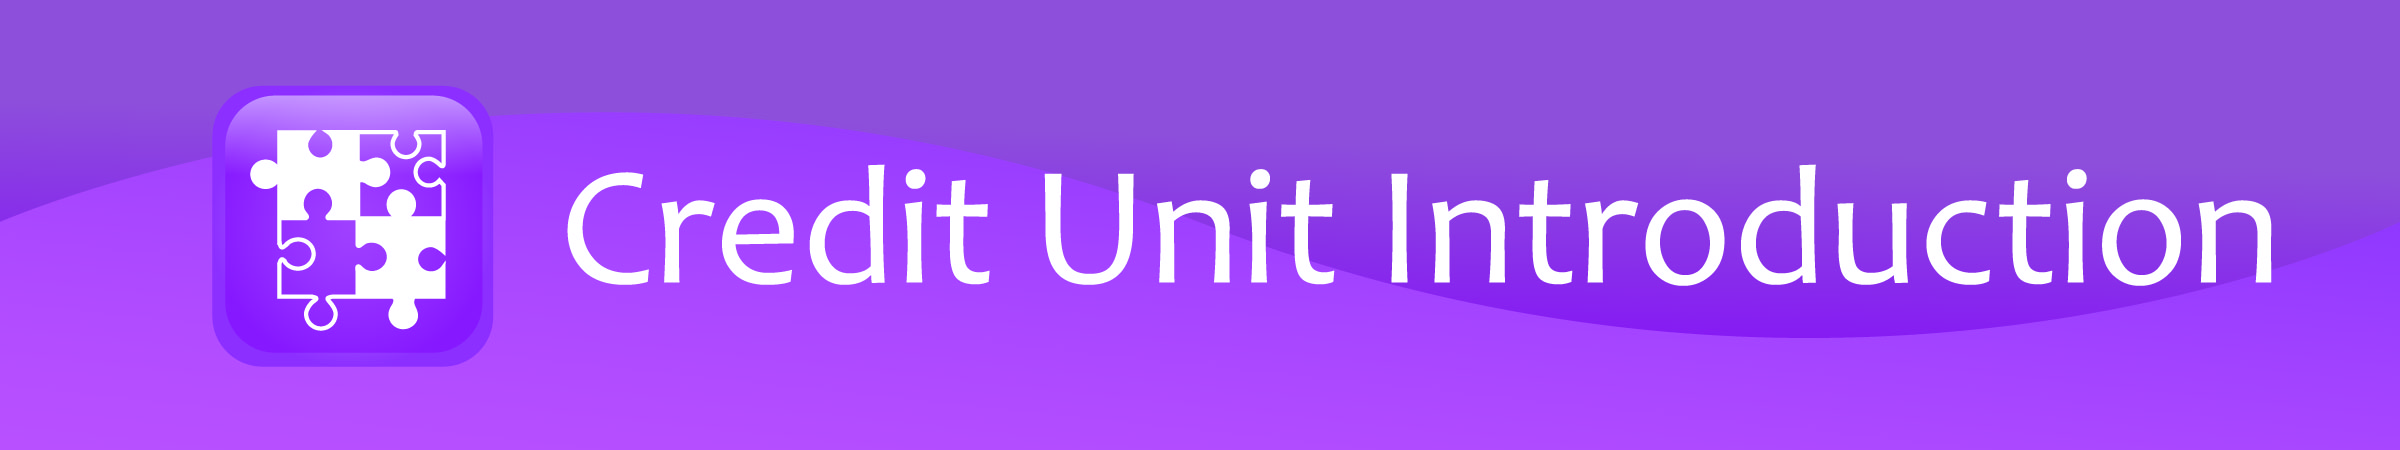 Credit Unit Introduction Banner